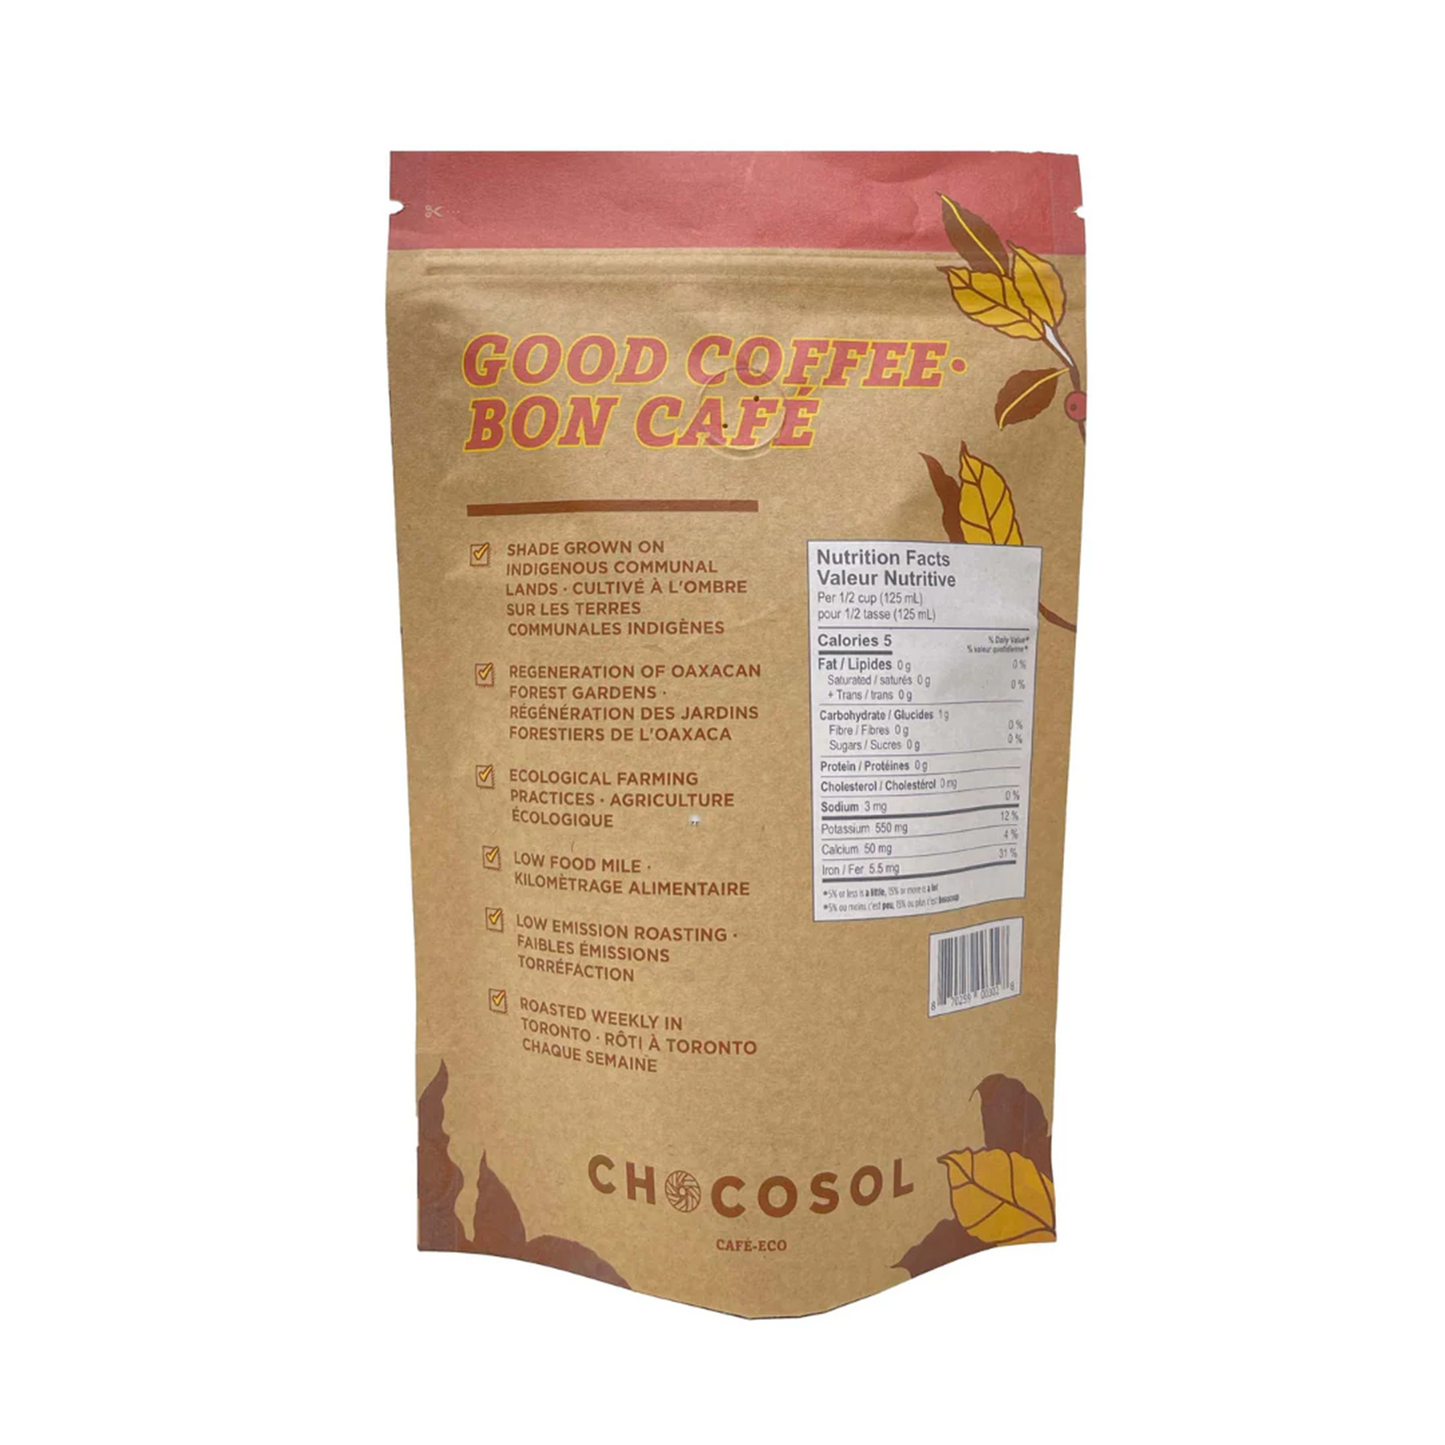 Chocosol® Forest Garden Coffee - Espresso 340g